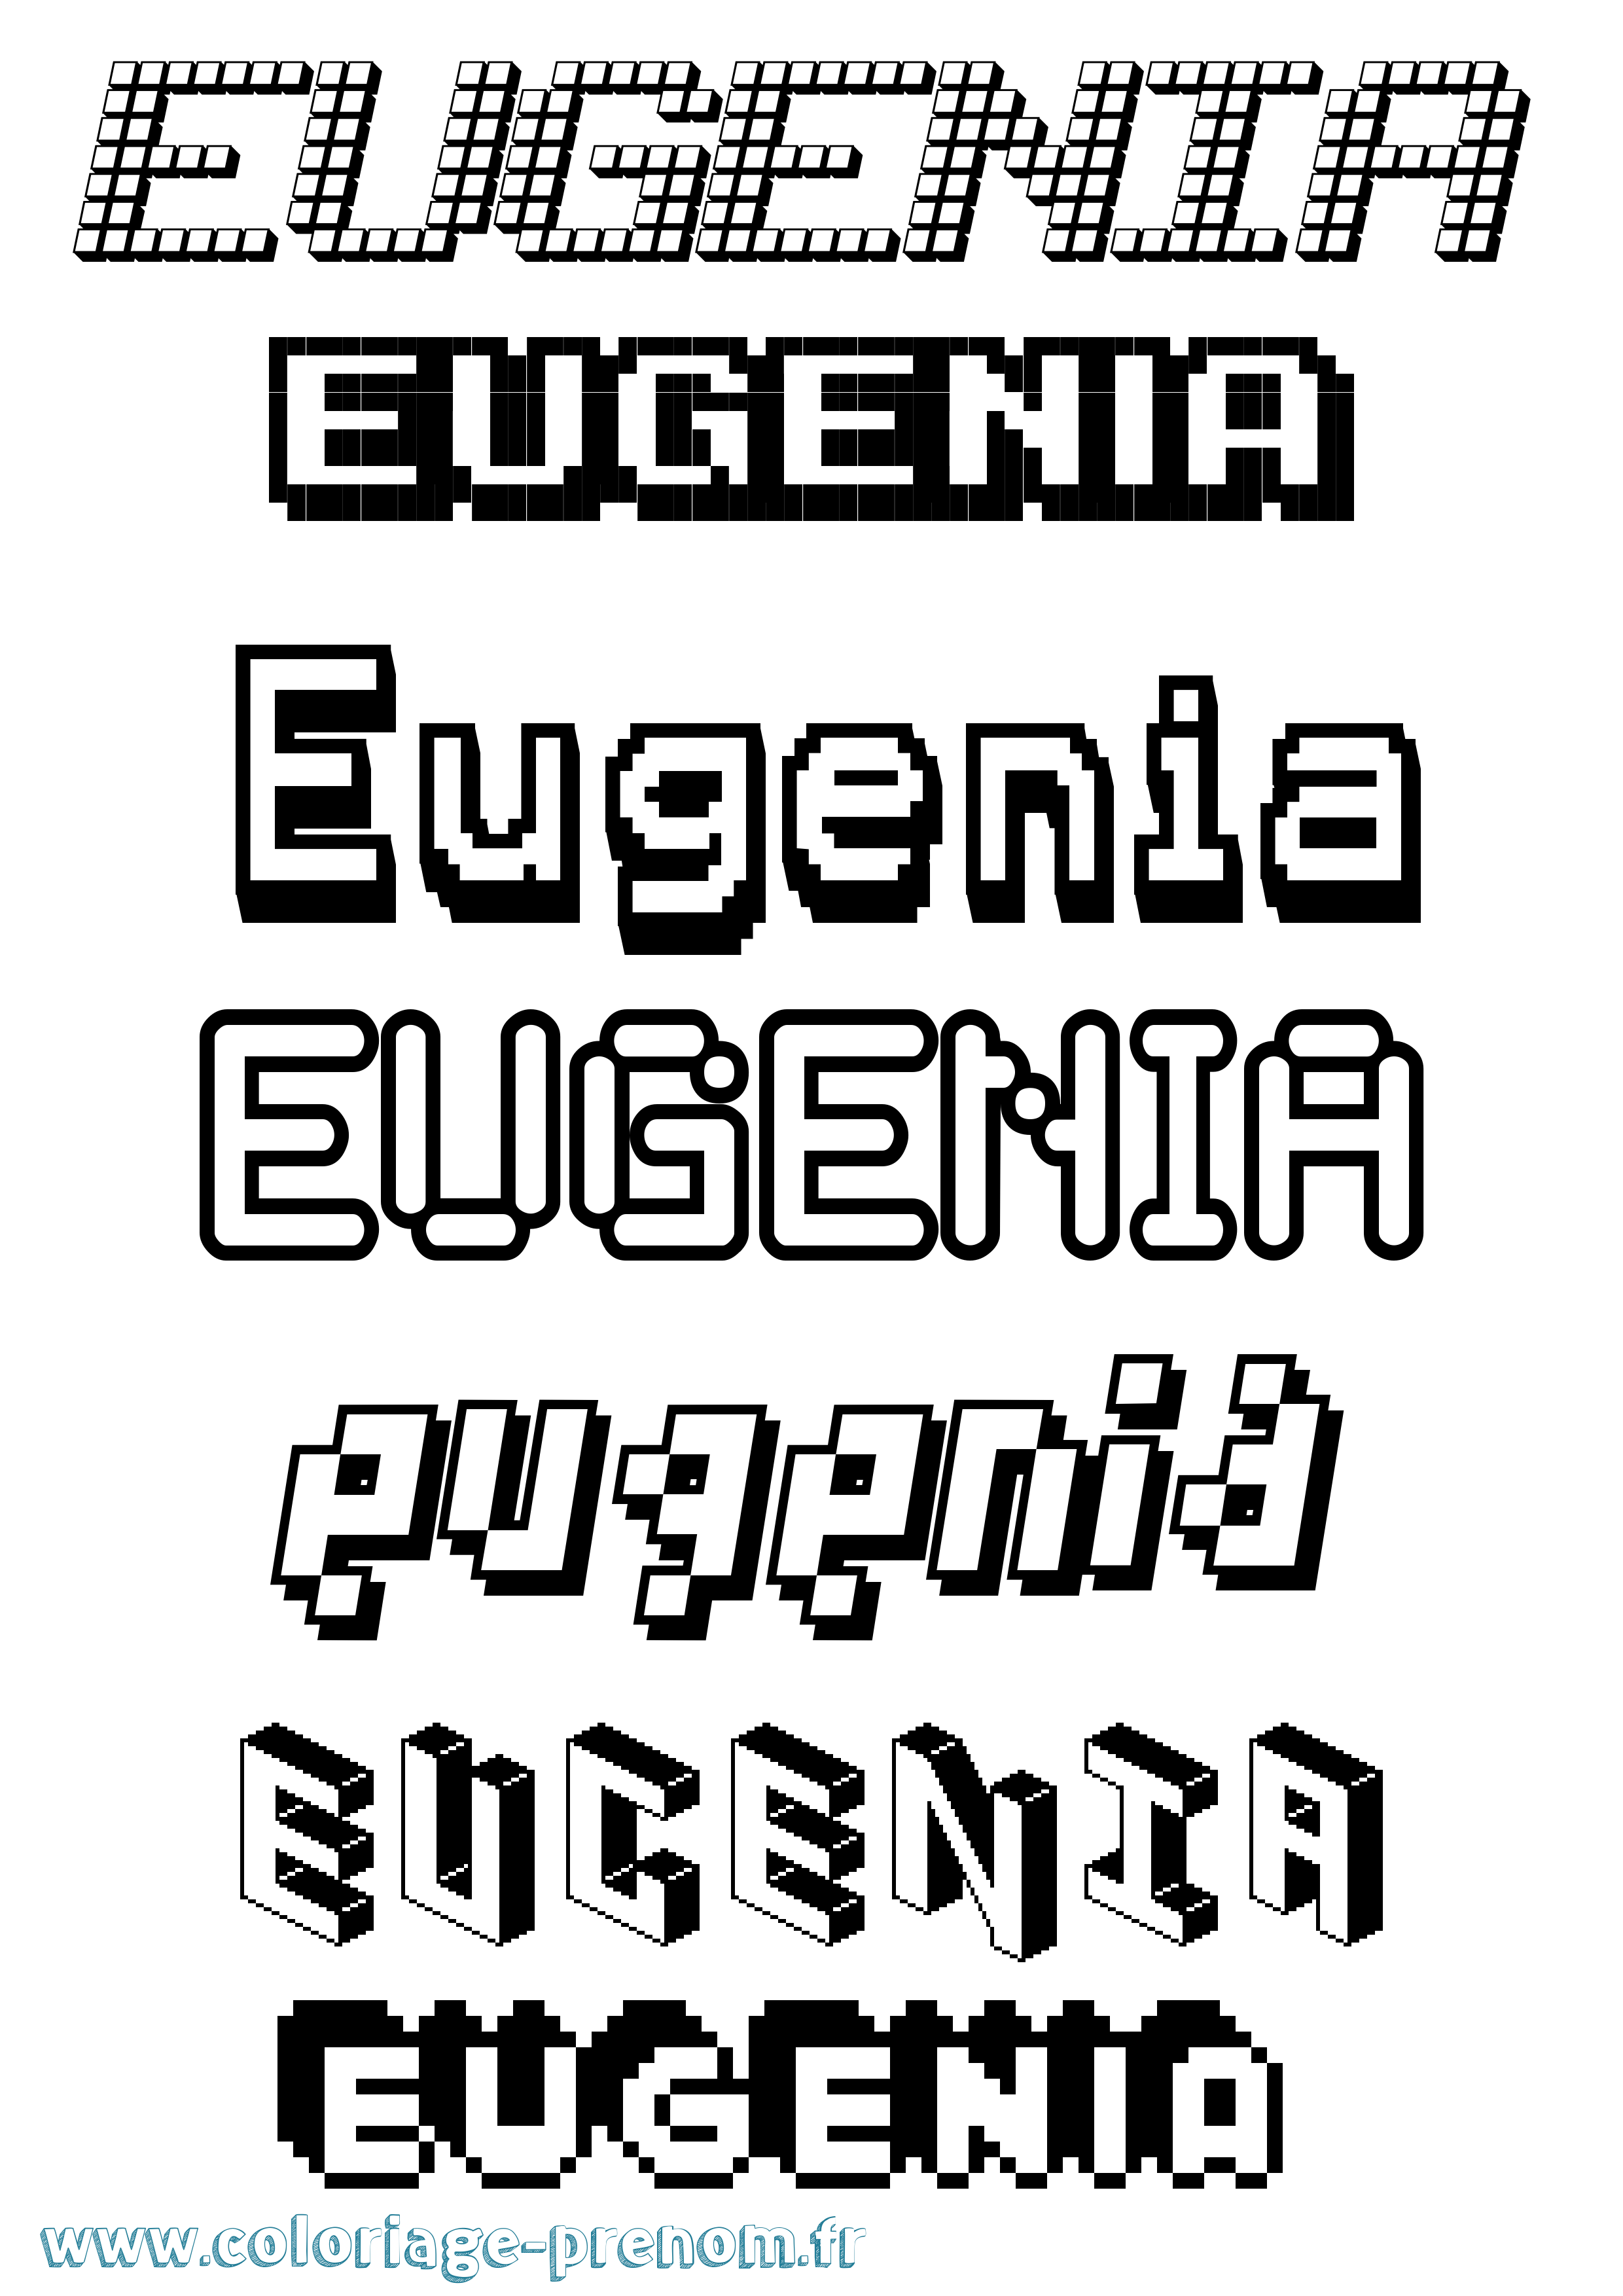 Coloriage prénom Eugenia Pixel